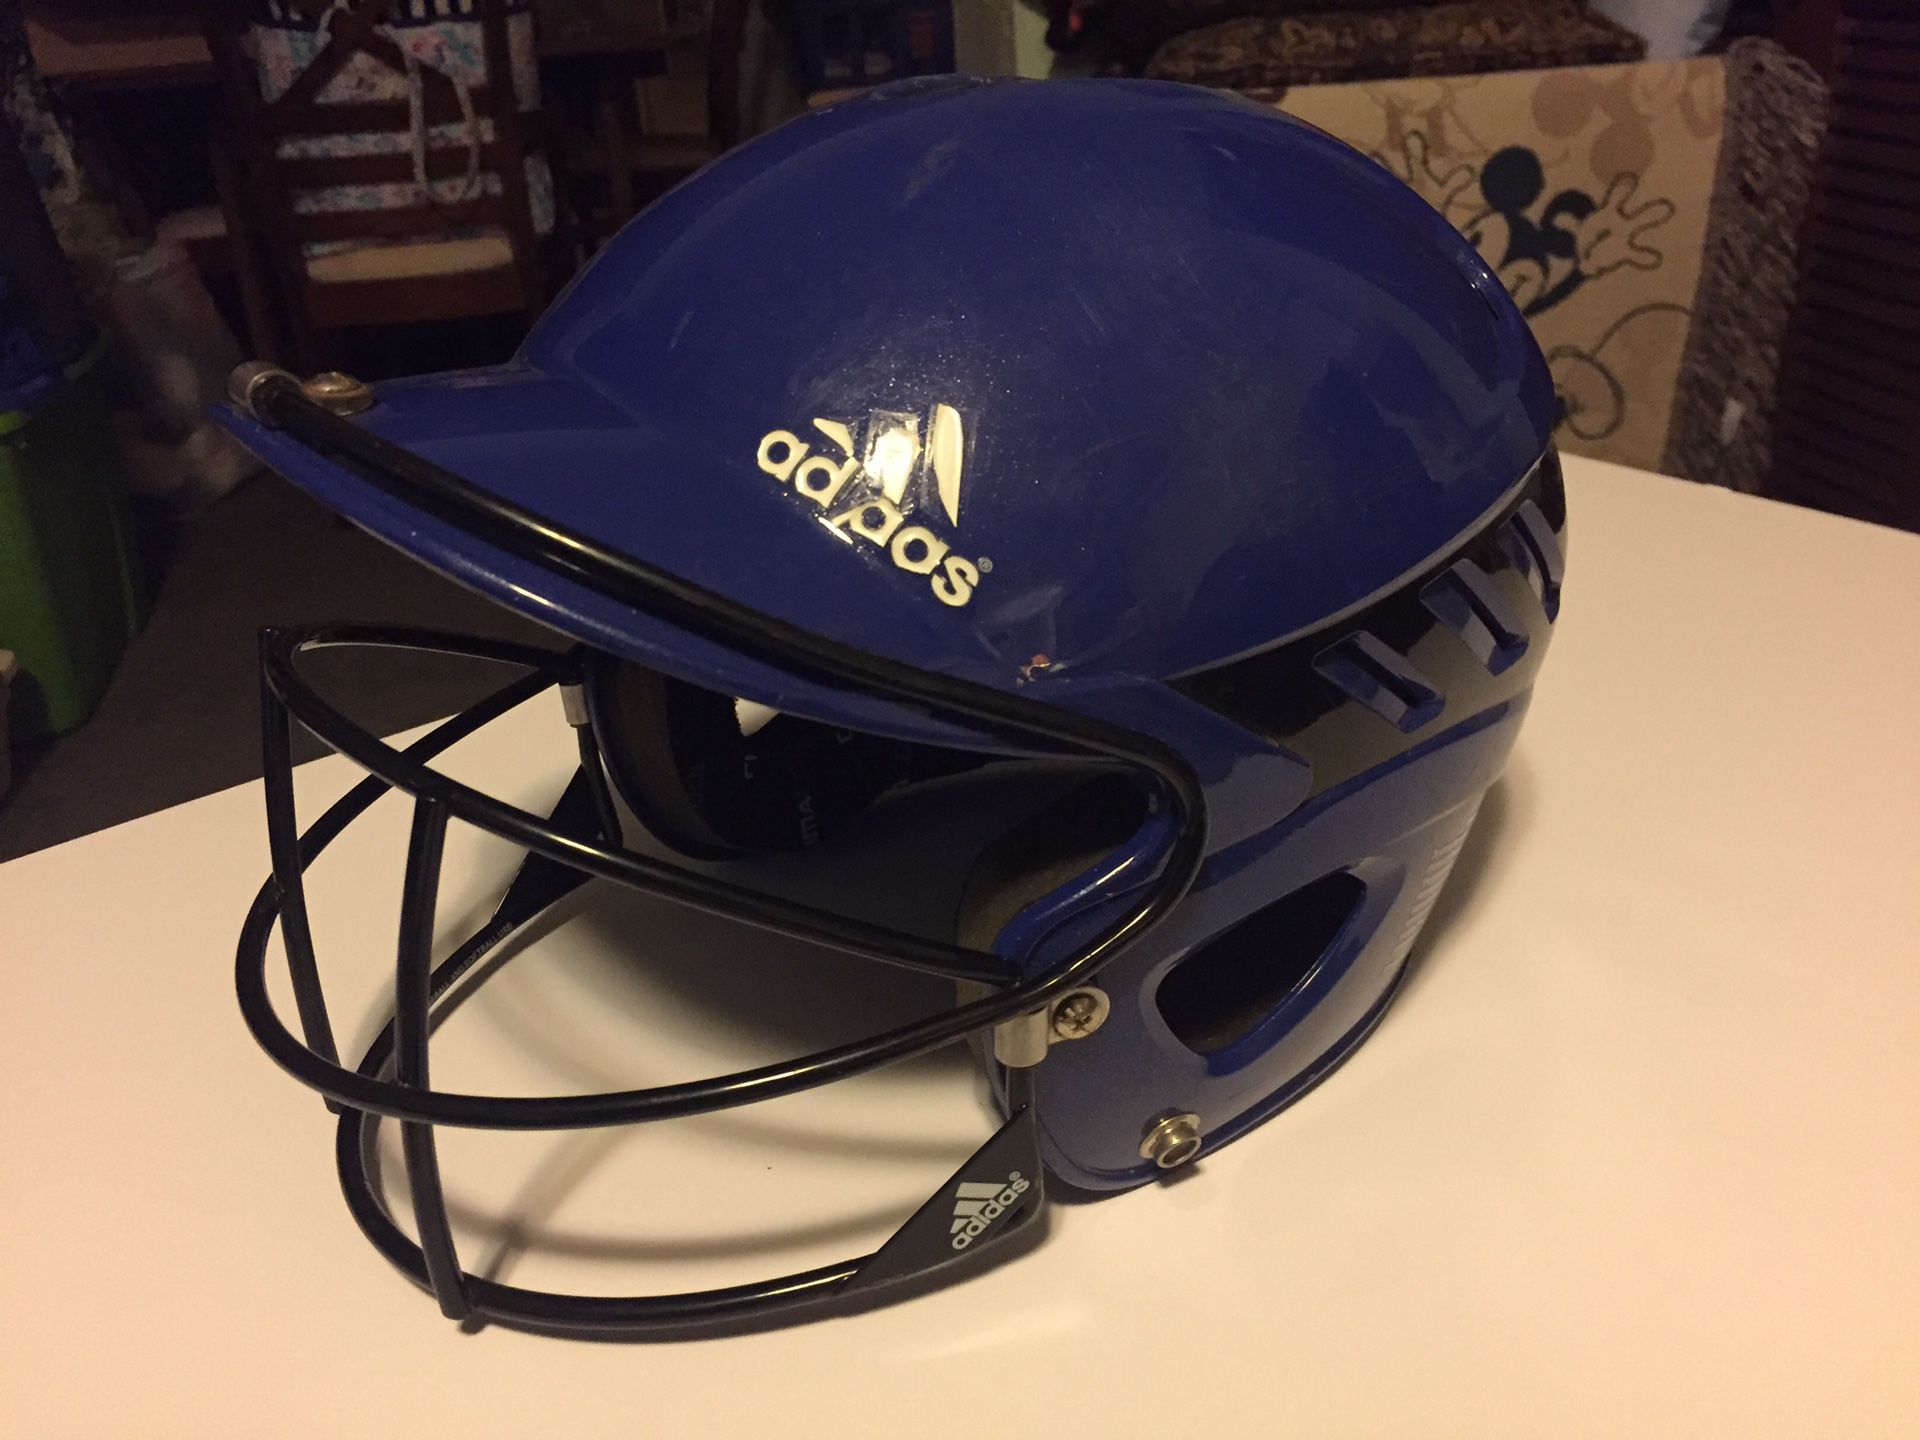 Adidas baseball/softball batting helmet